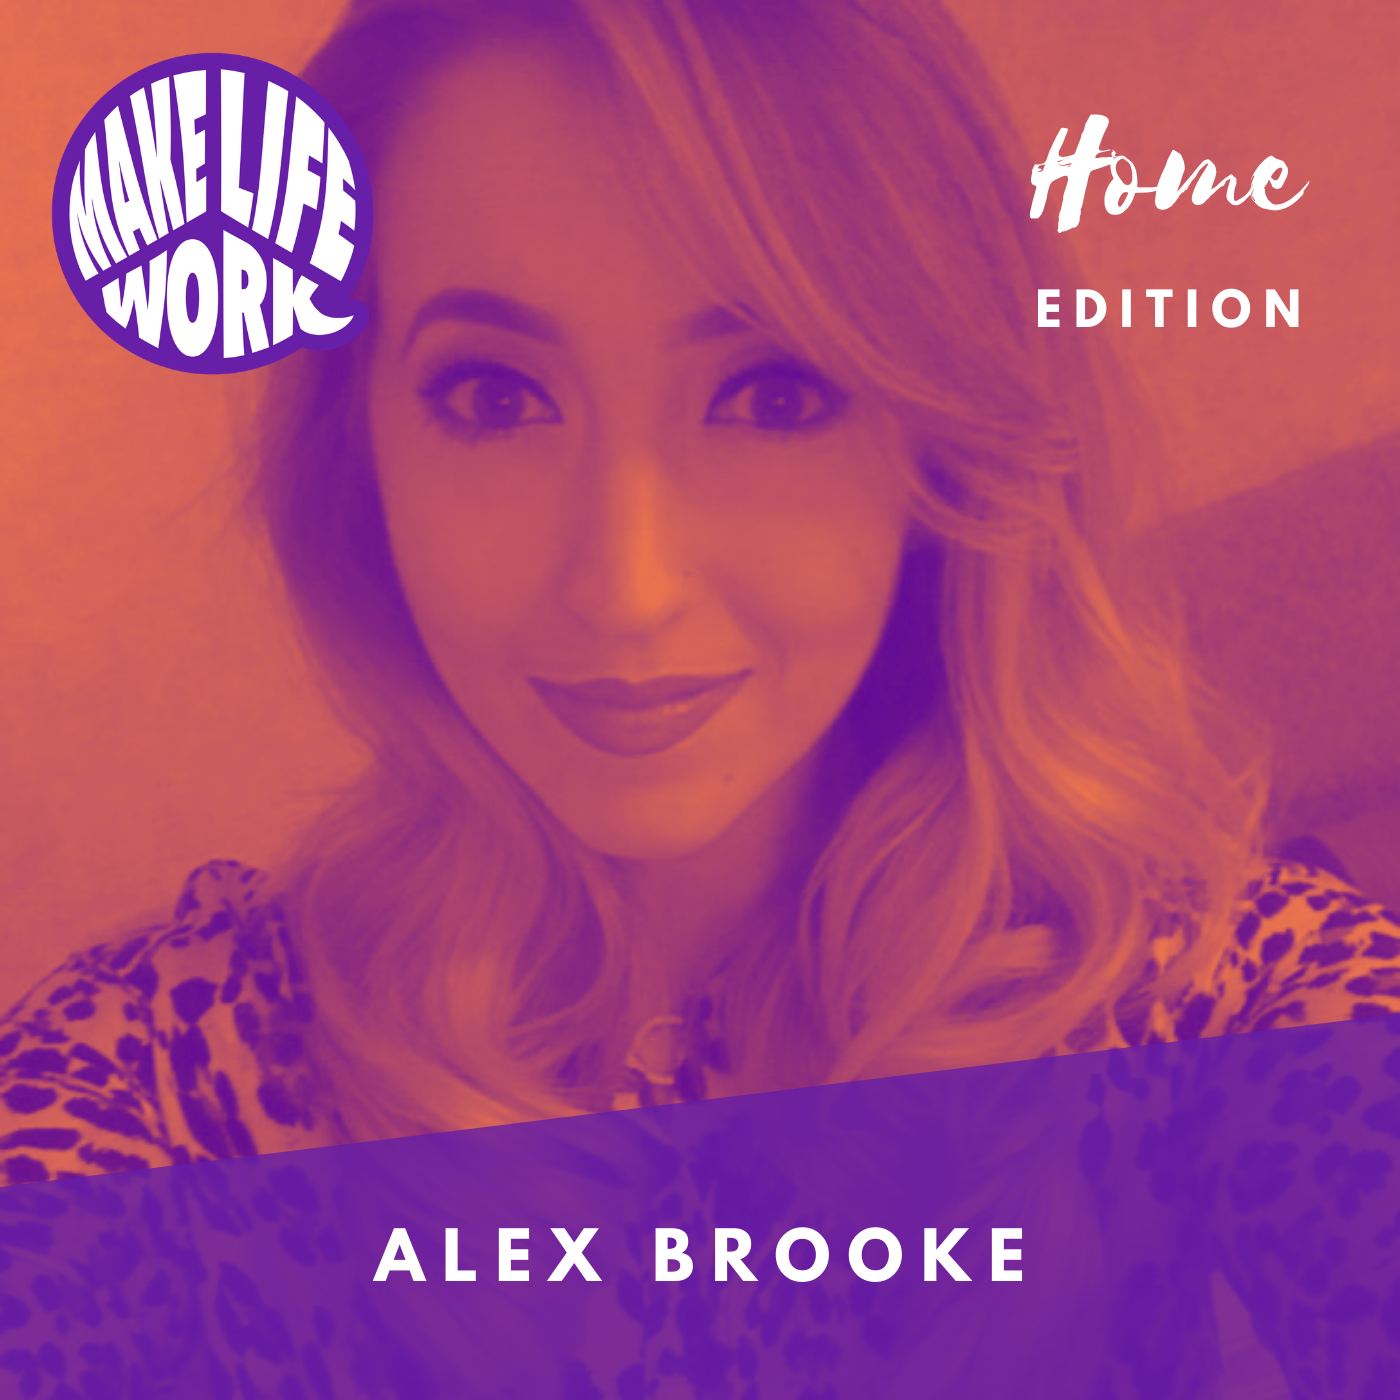 Make Life Work with Alex Brooke